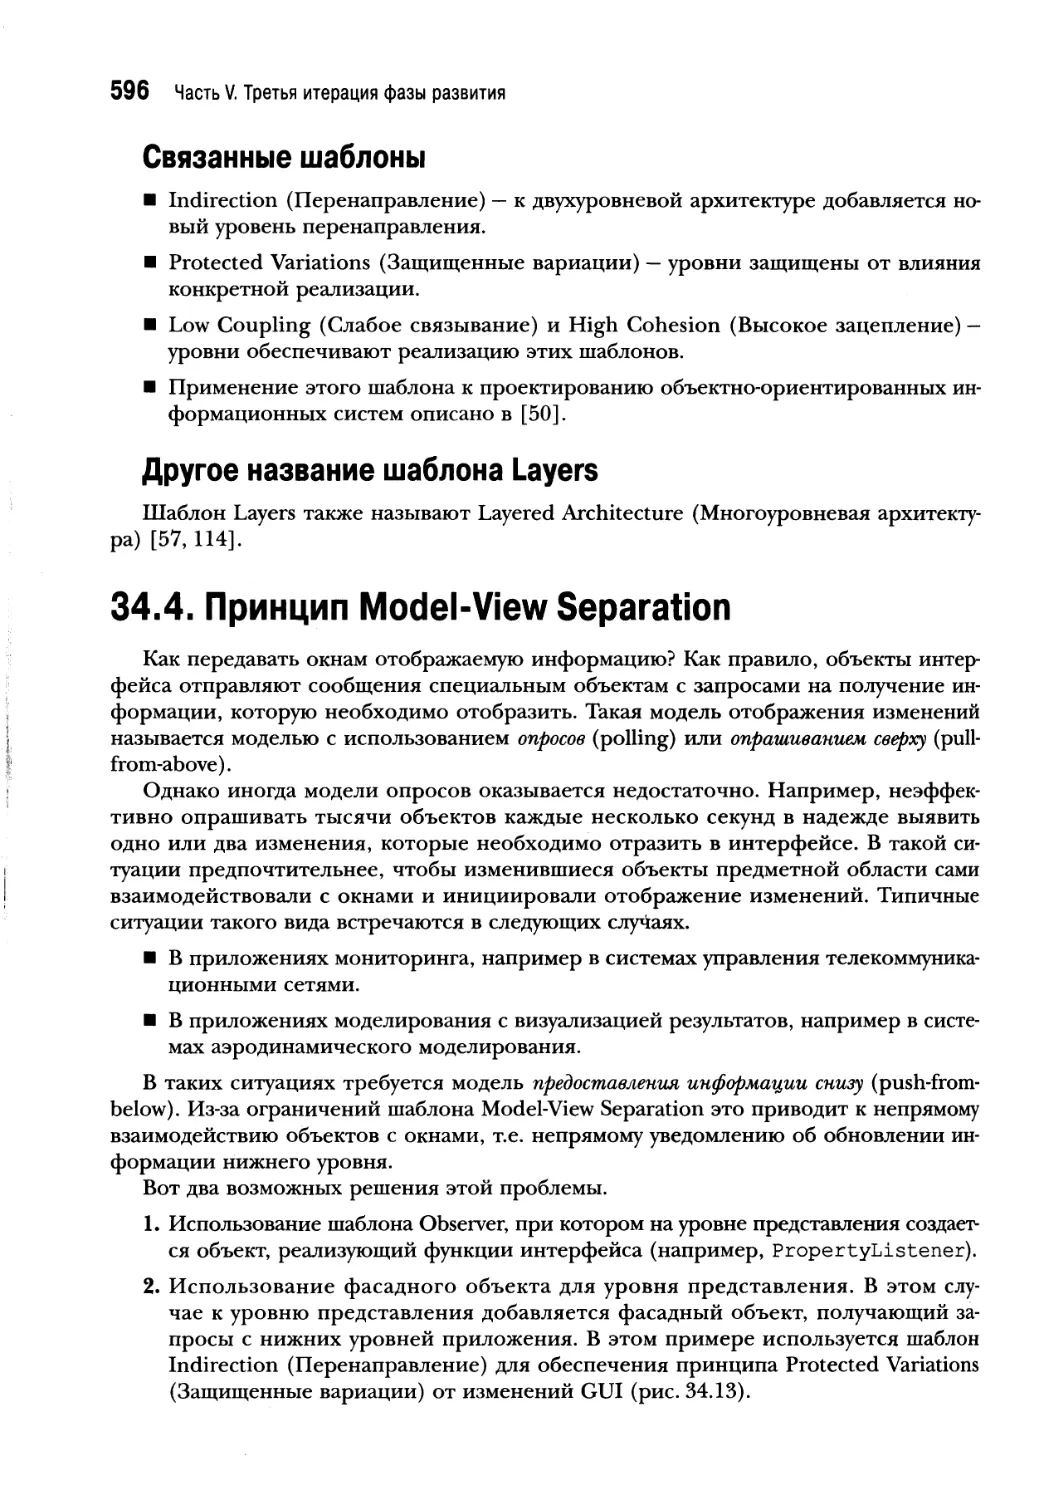 34.4. Принцип Model-View Separation